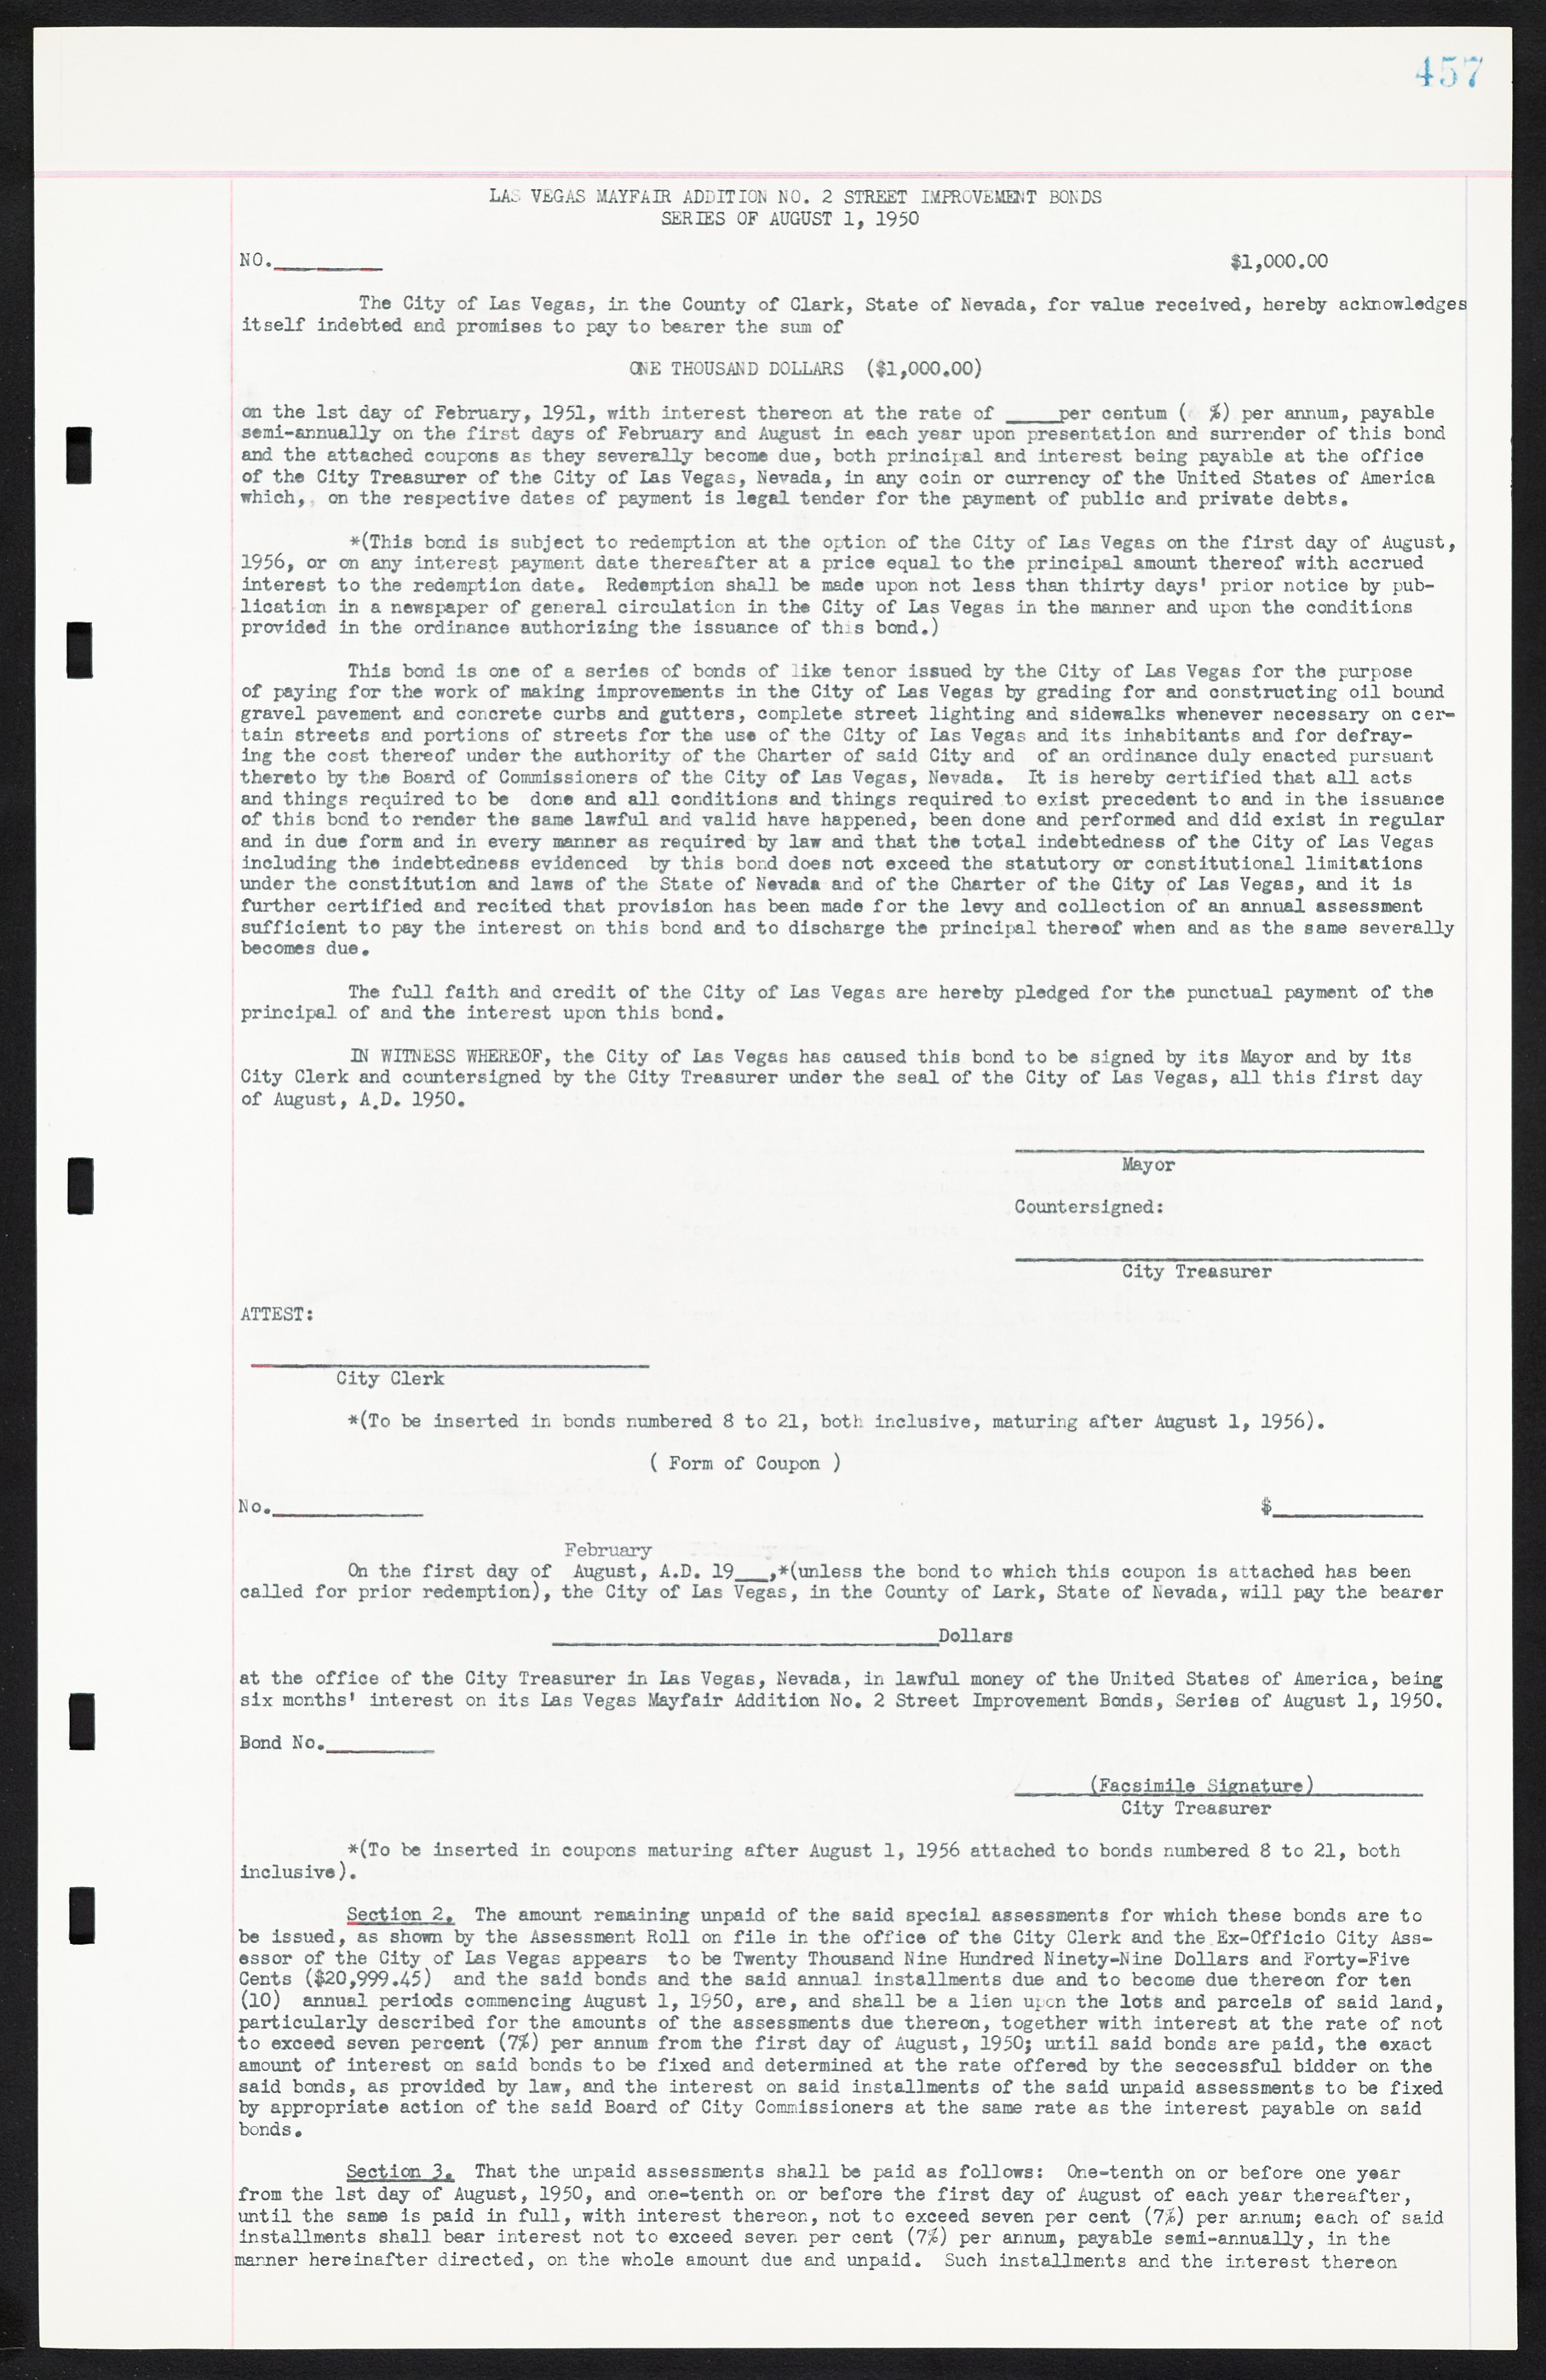 Las Vegas City Ordinances, March 31, 1933 to October 25, 1950, lvc000014-493